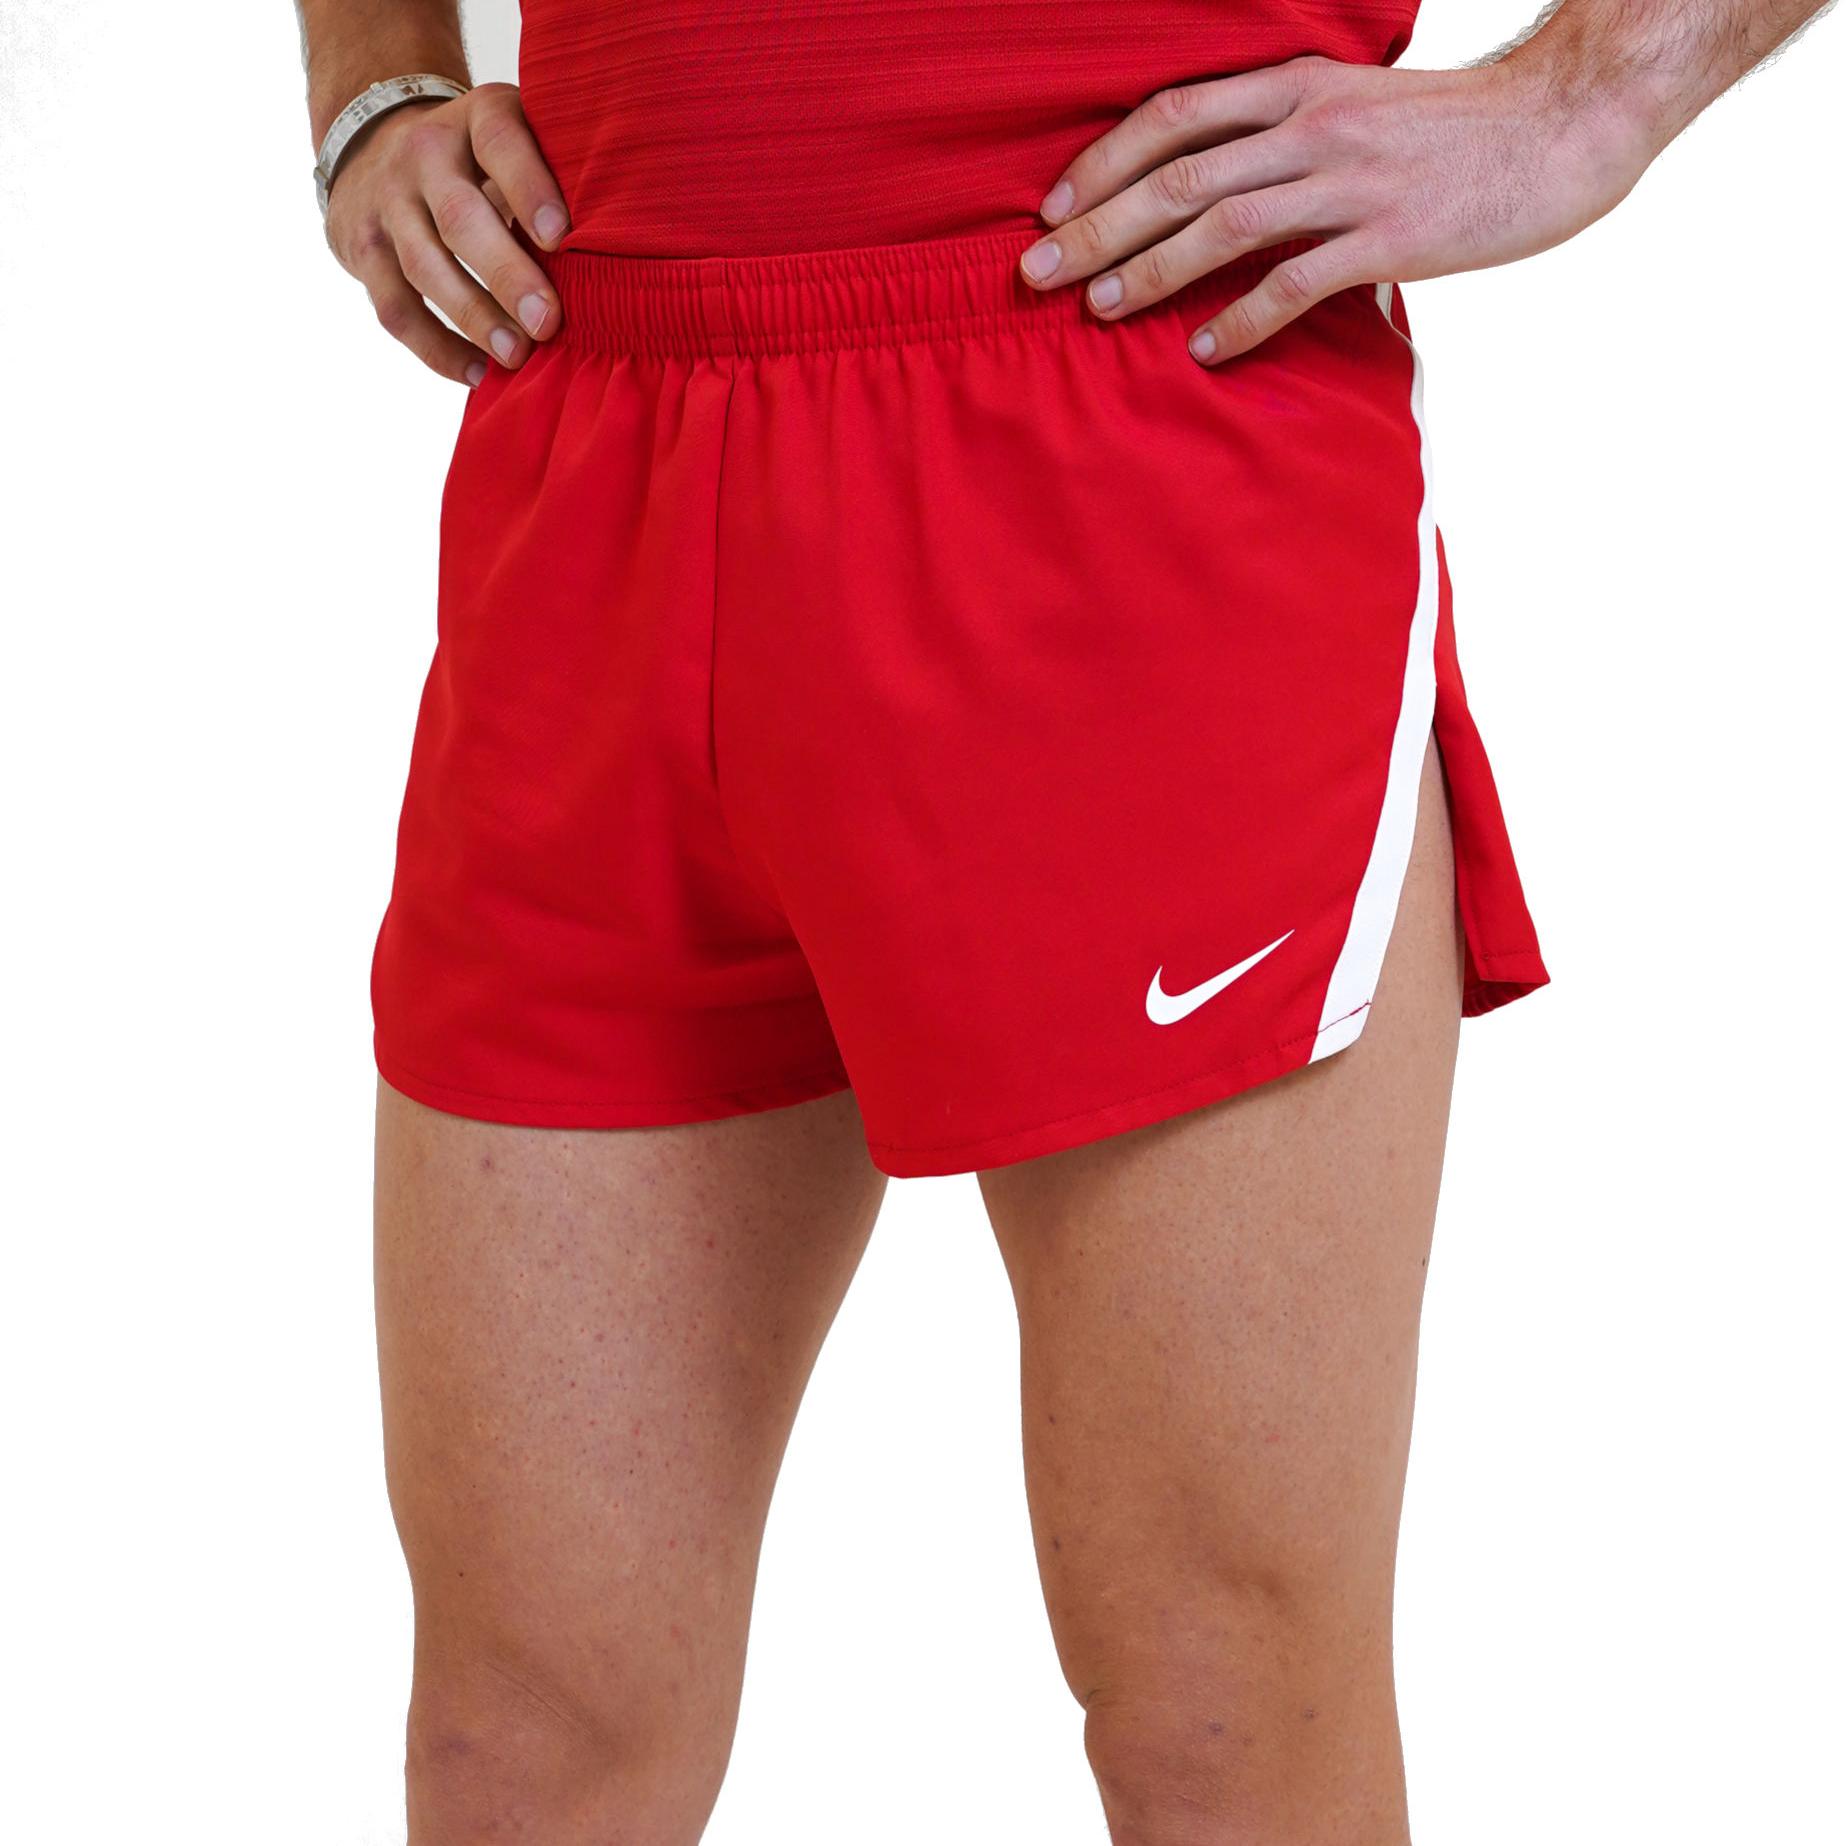 Shorts Nike men Stock Fast 2 inch Short